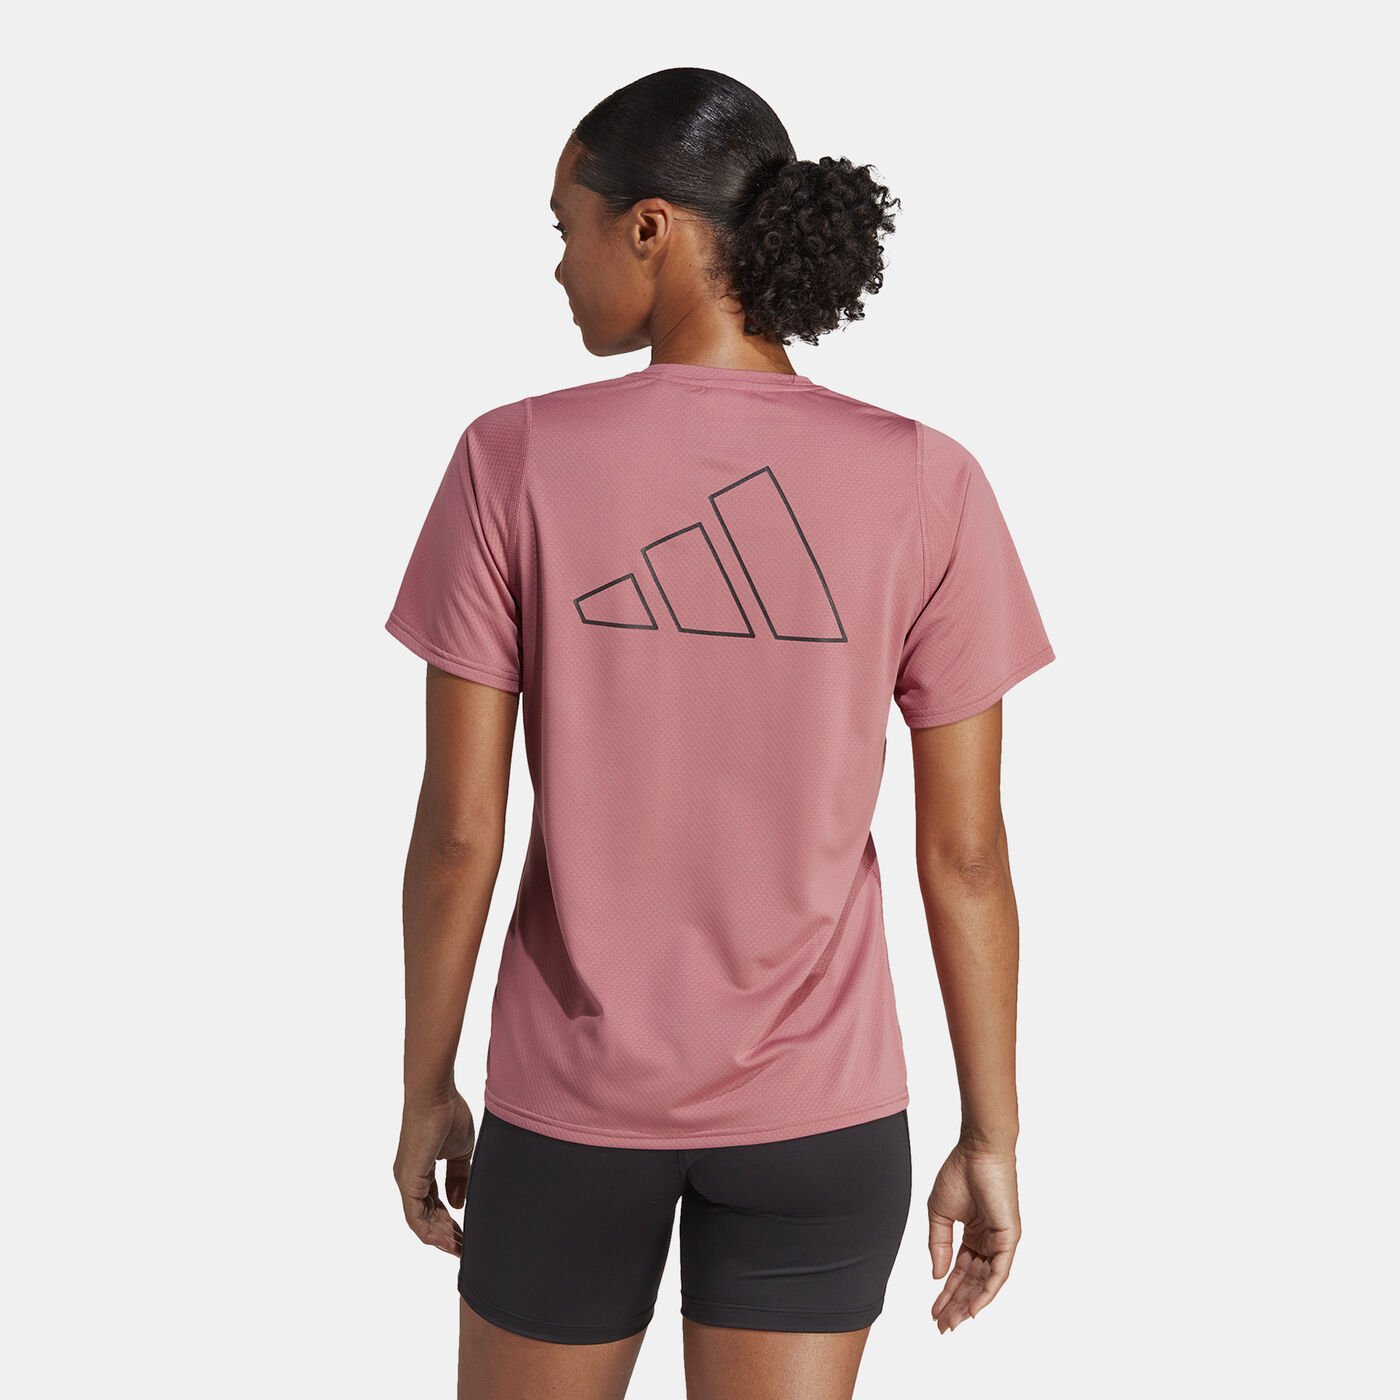 Women's Run Icon 3 Bar Running T-Shirt